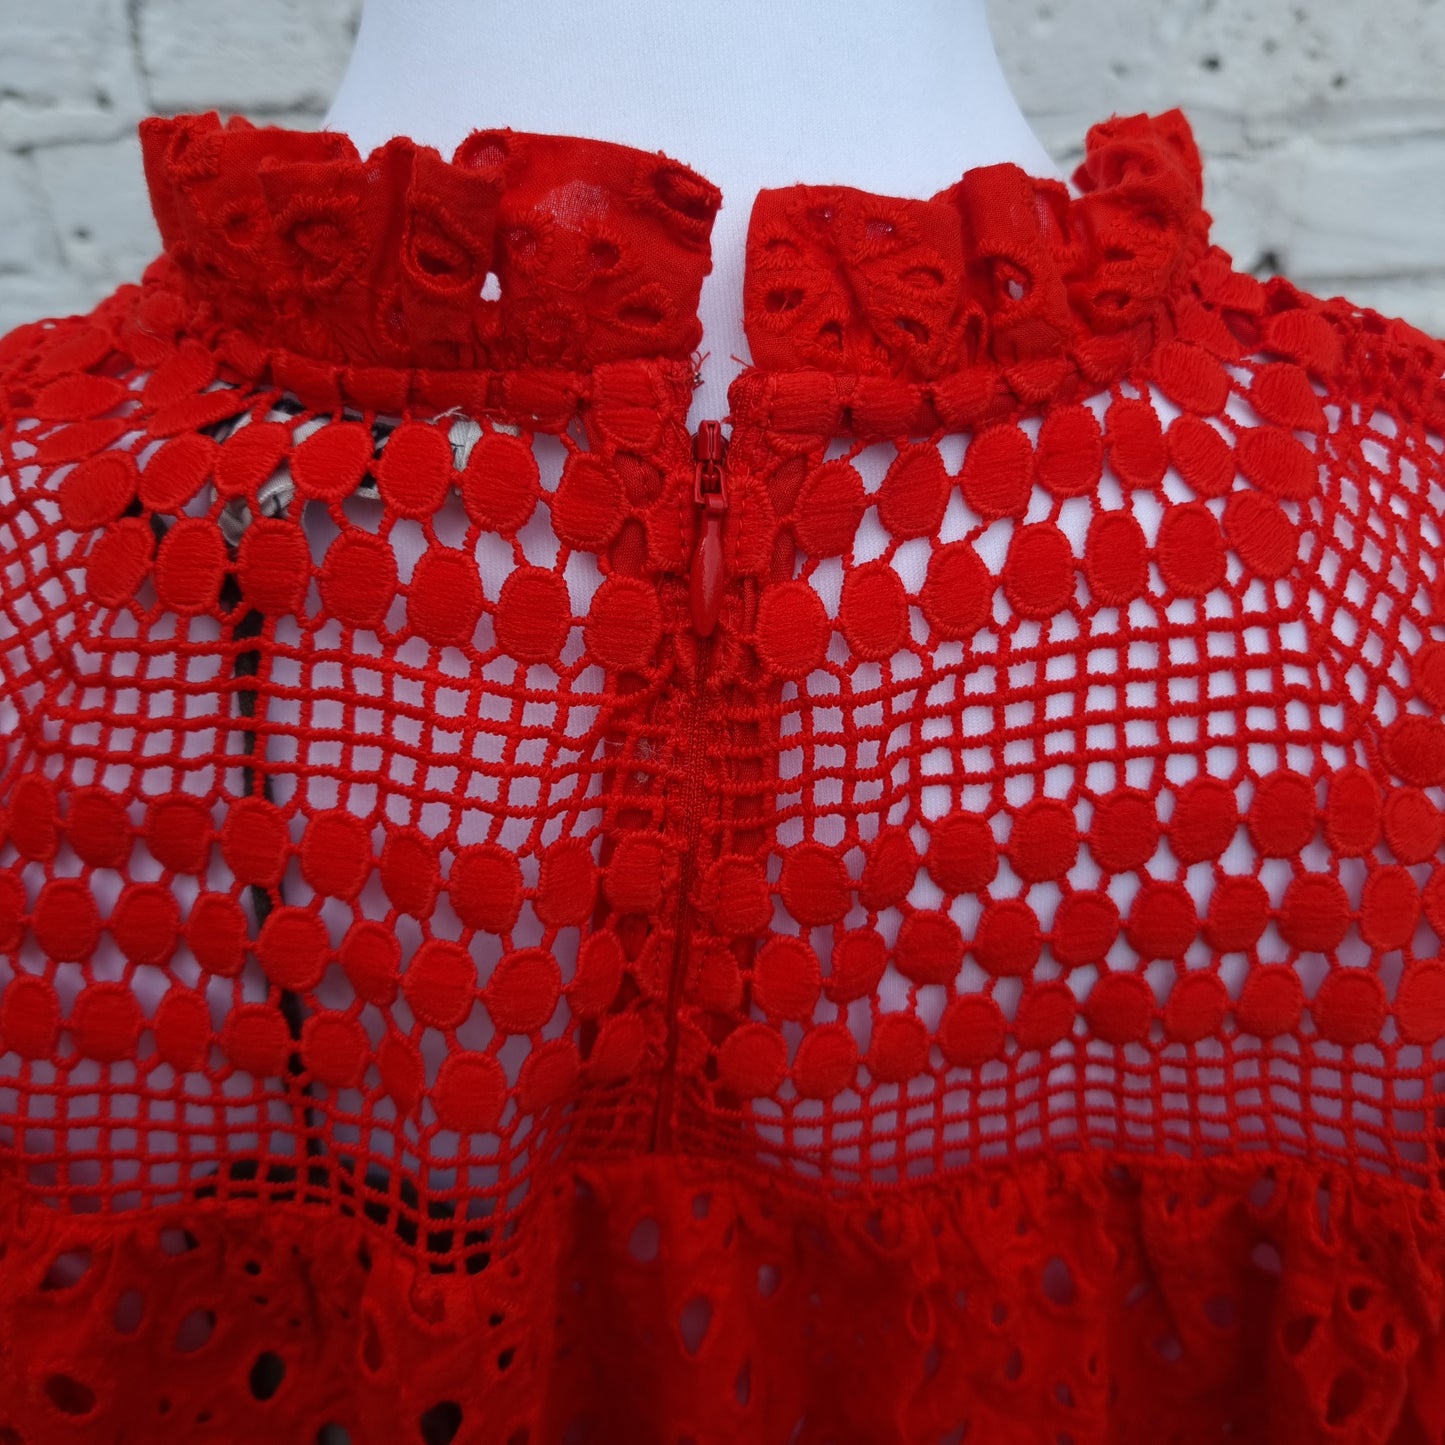 AllSaints Tila Bright Red Broderie Cotton Top UK Size 8 EUR 36